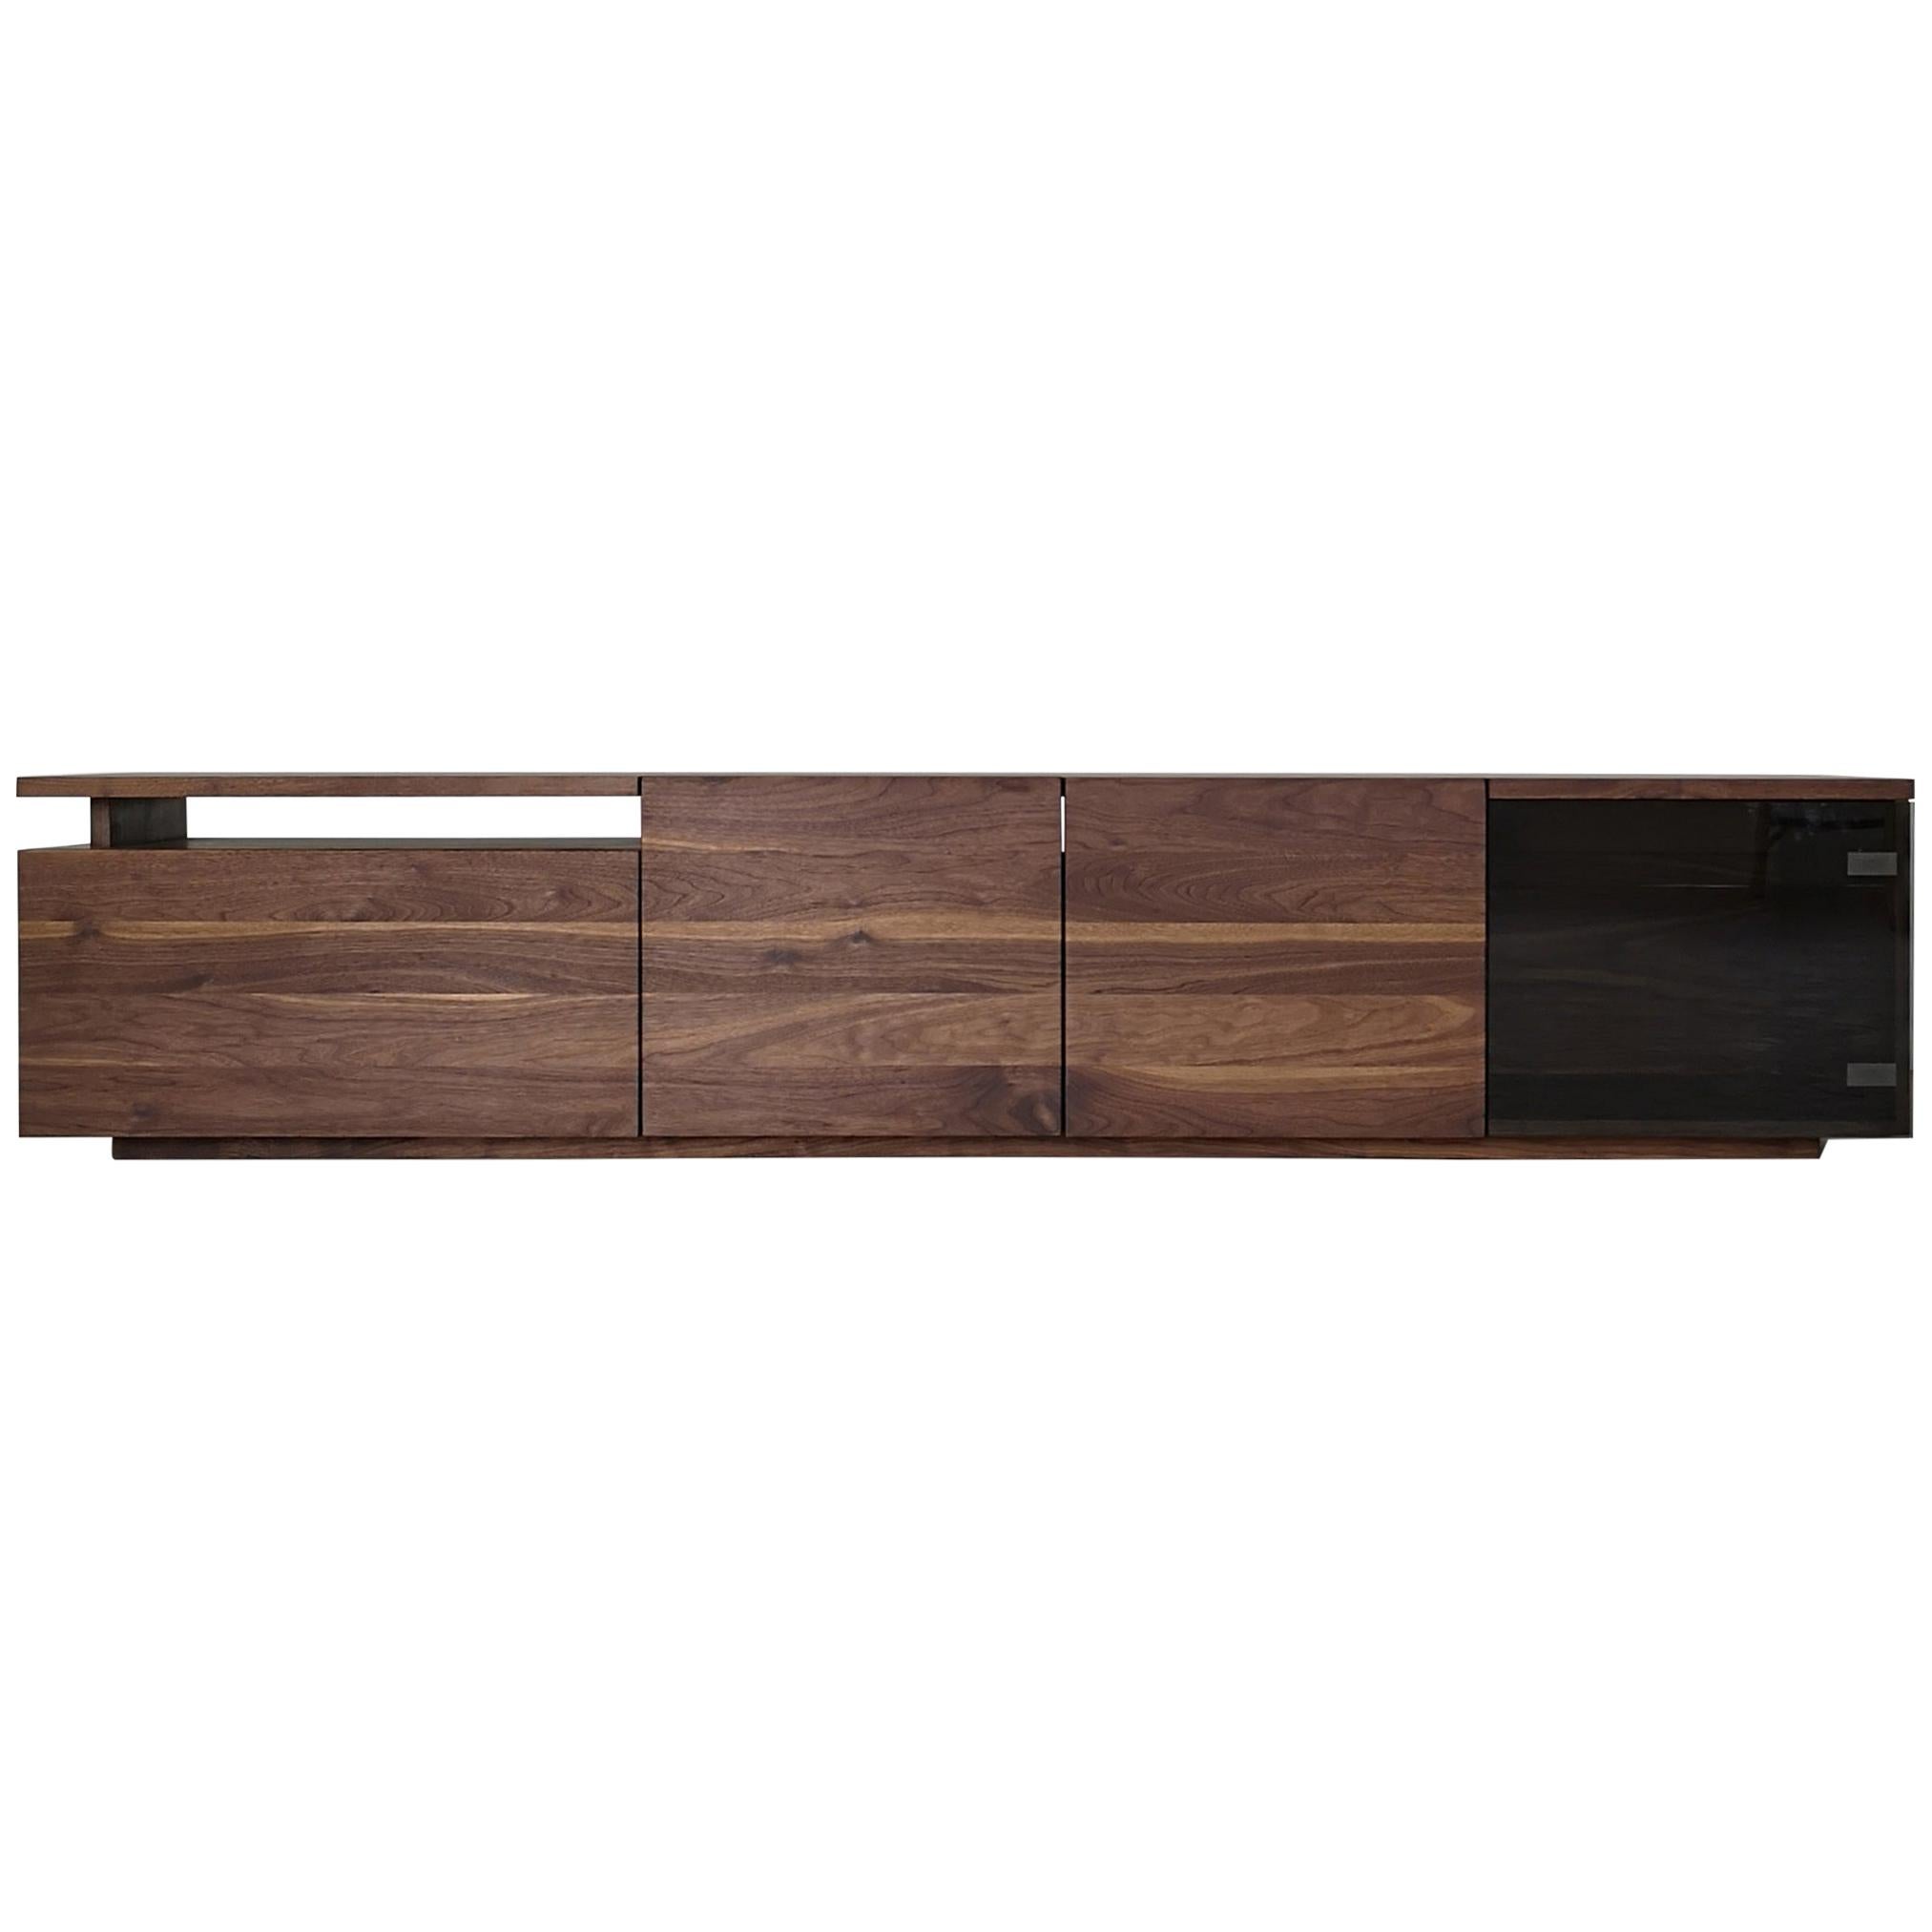 Visuaizm Audio/Visual Solid Hardwood Cabinet For Sale